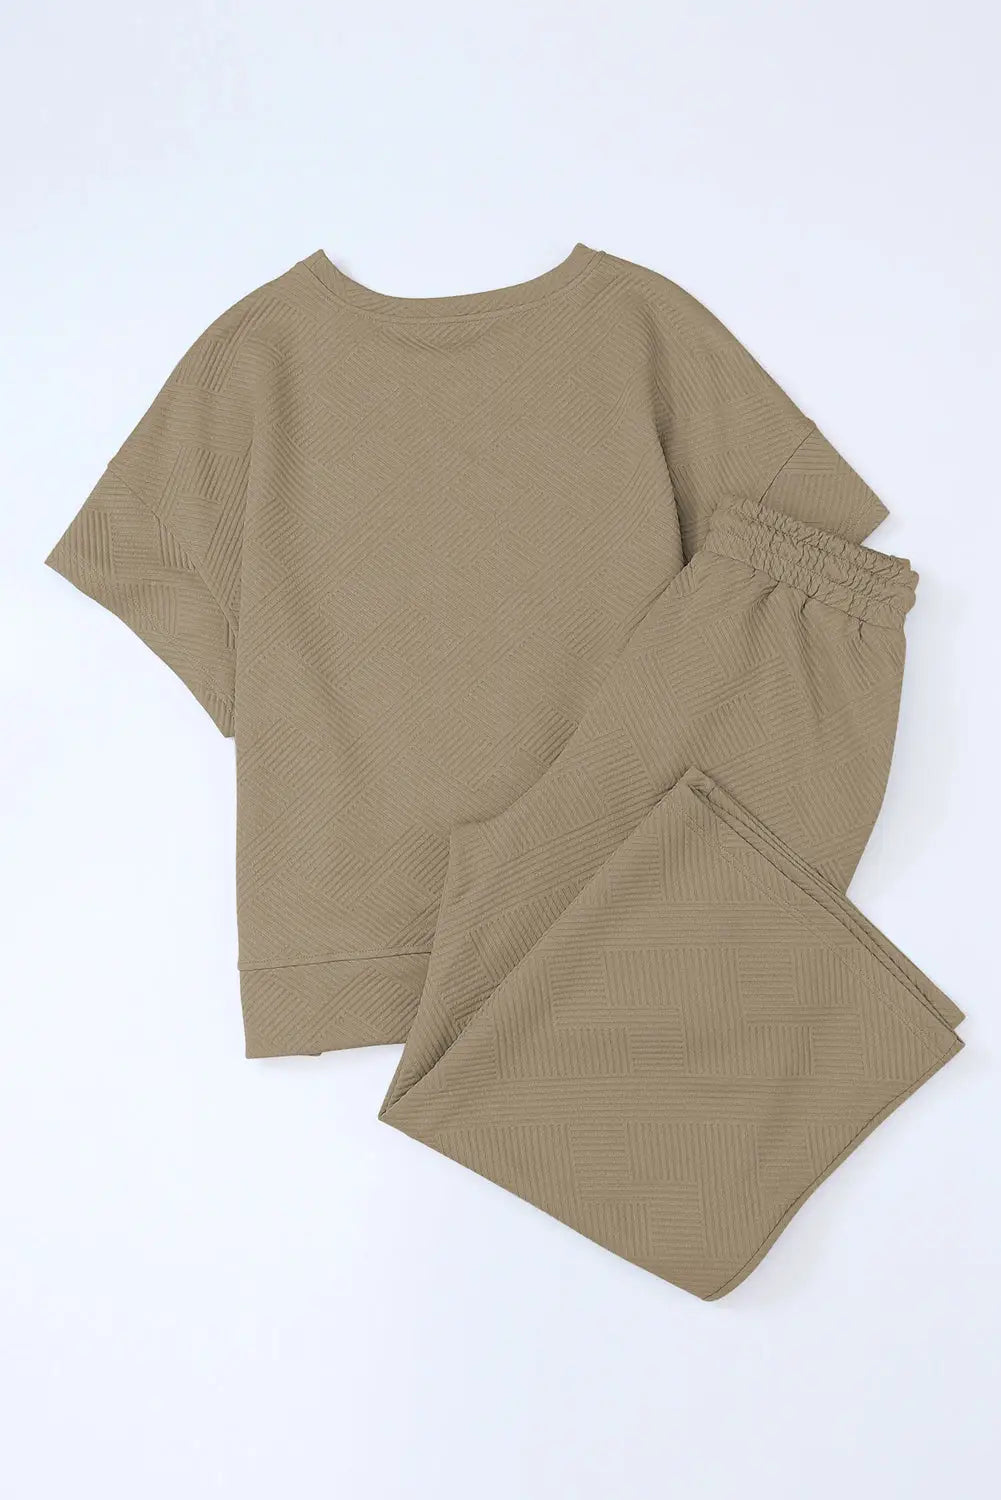 Brown textured loose fit t shirt and drawstring pants set - loungewear